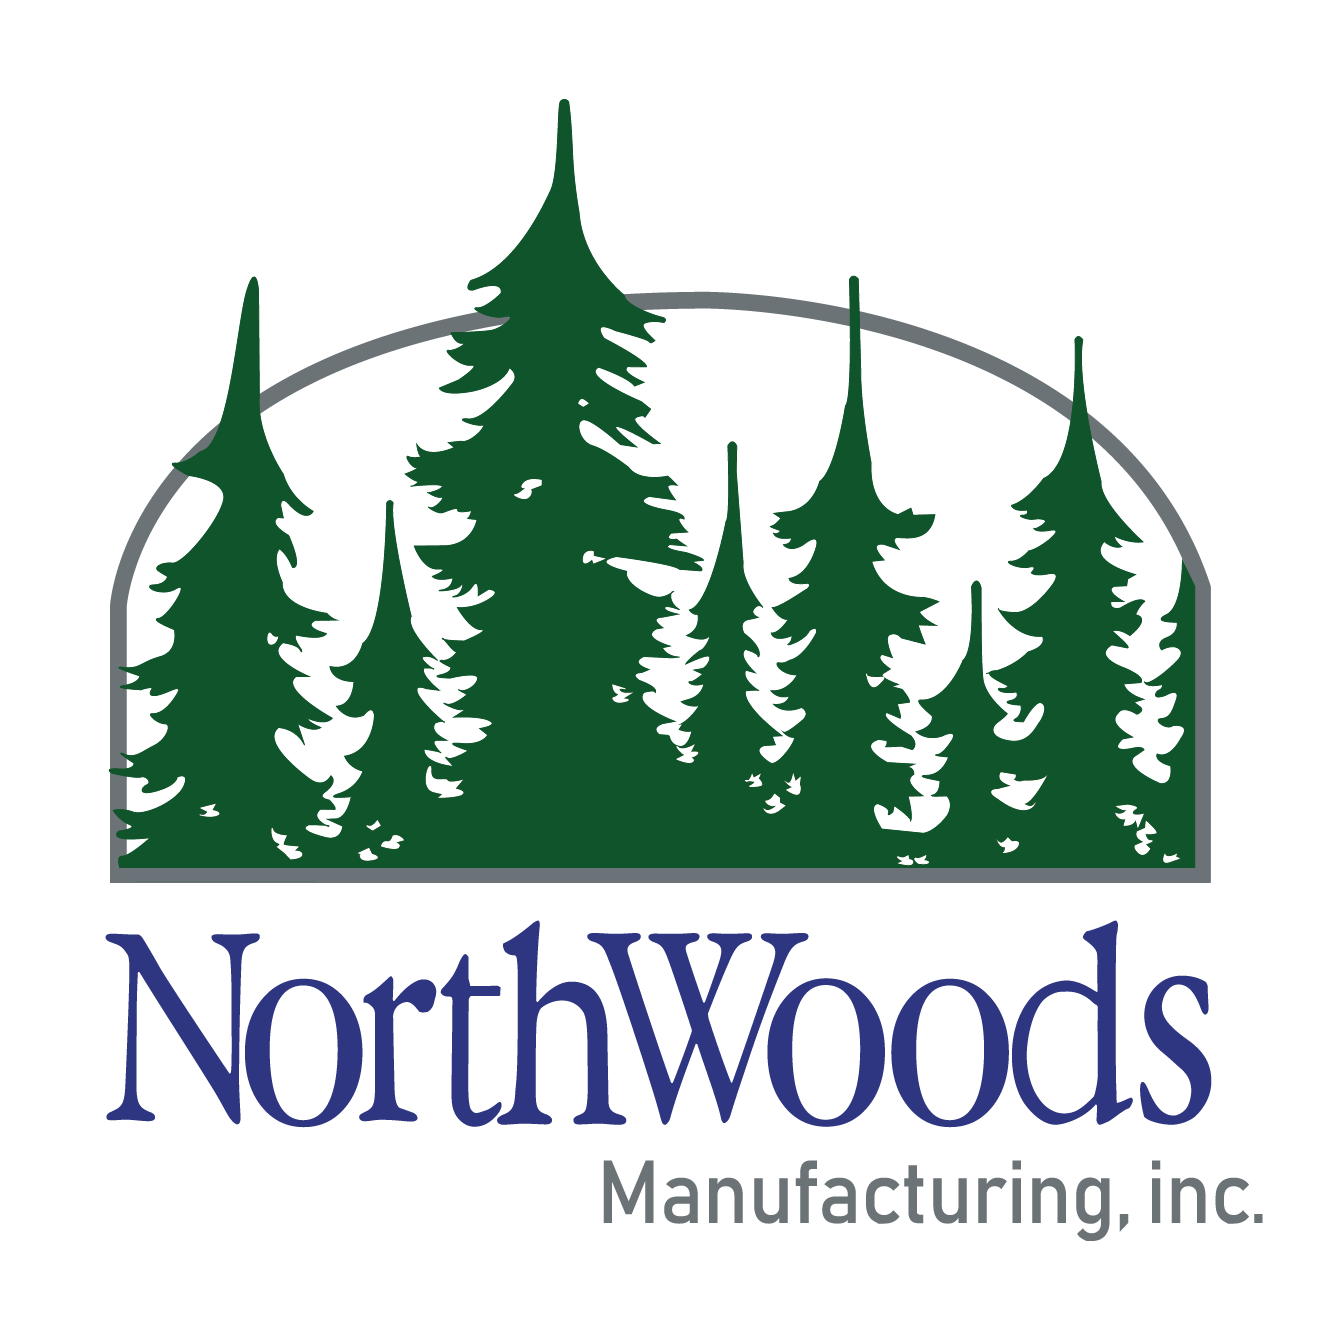 NorthWoods Manufacturing